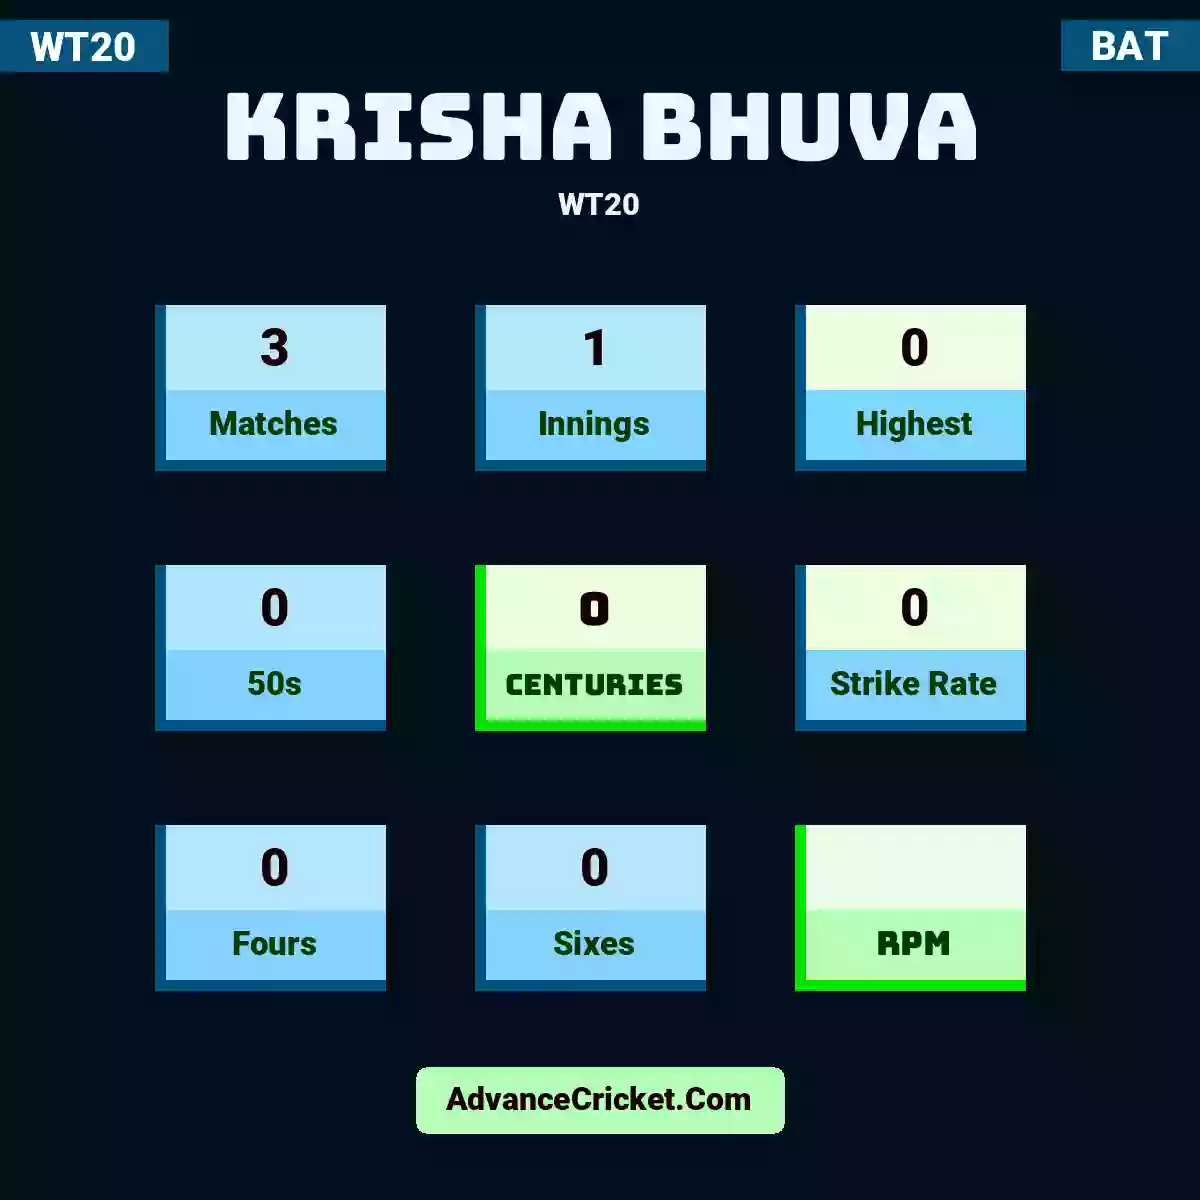 Krisha Bhuva WT20 , Krisha Bhuva played 3 matches, scored 0 runs as highest, 0 half-centuries, and 0 centuries, with a strike rate of 0. K.Bhuva hit 0 fours and 0 sixes.